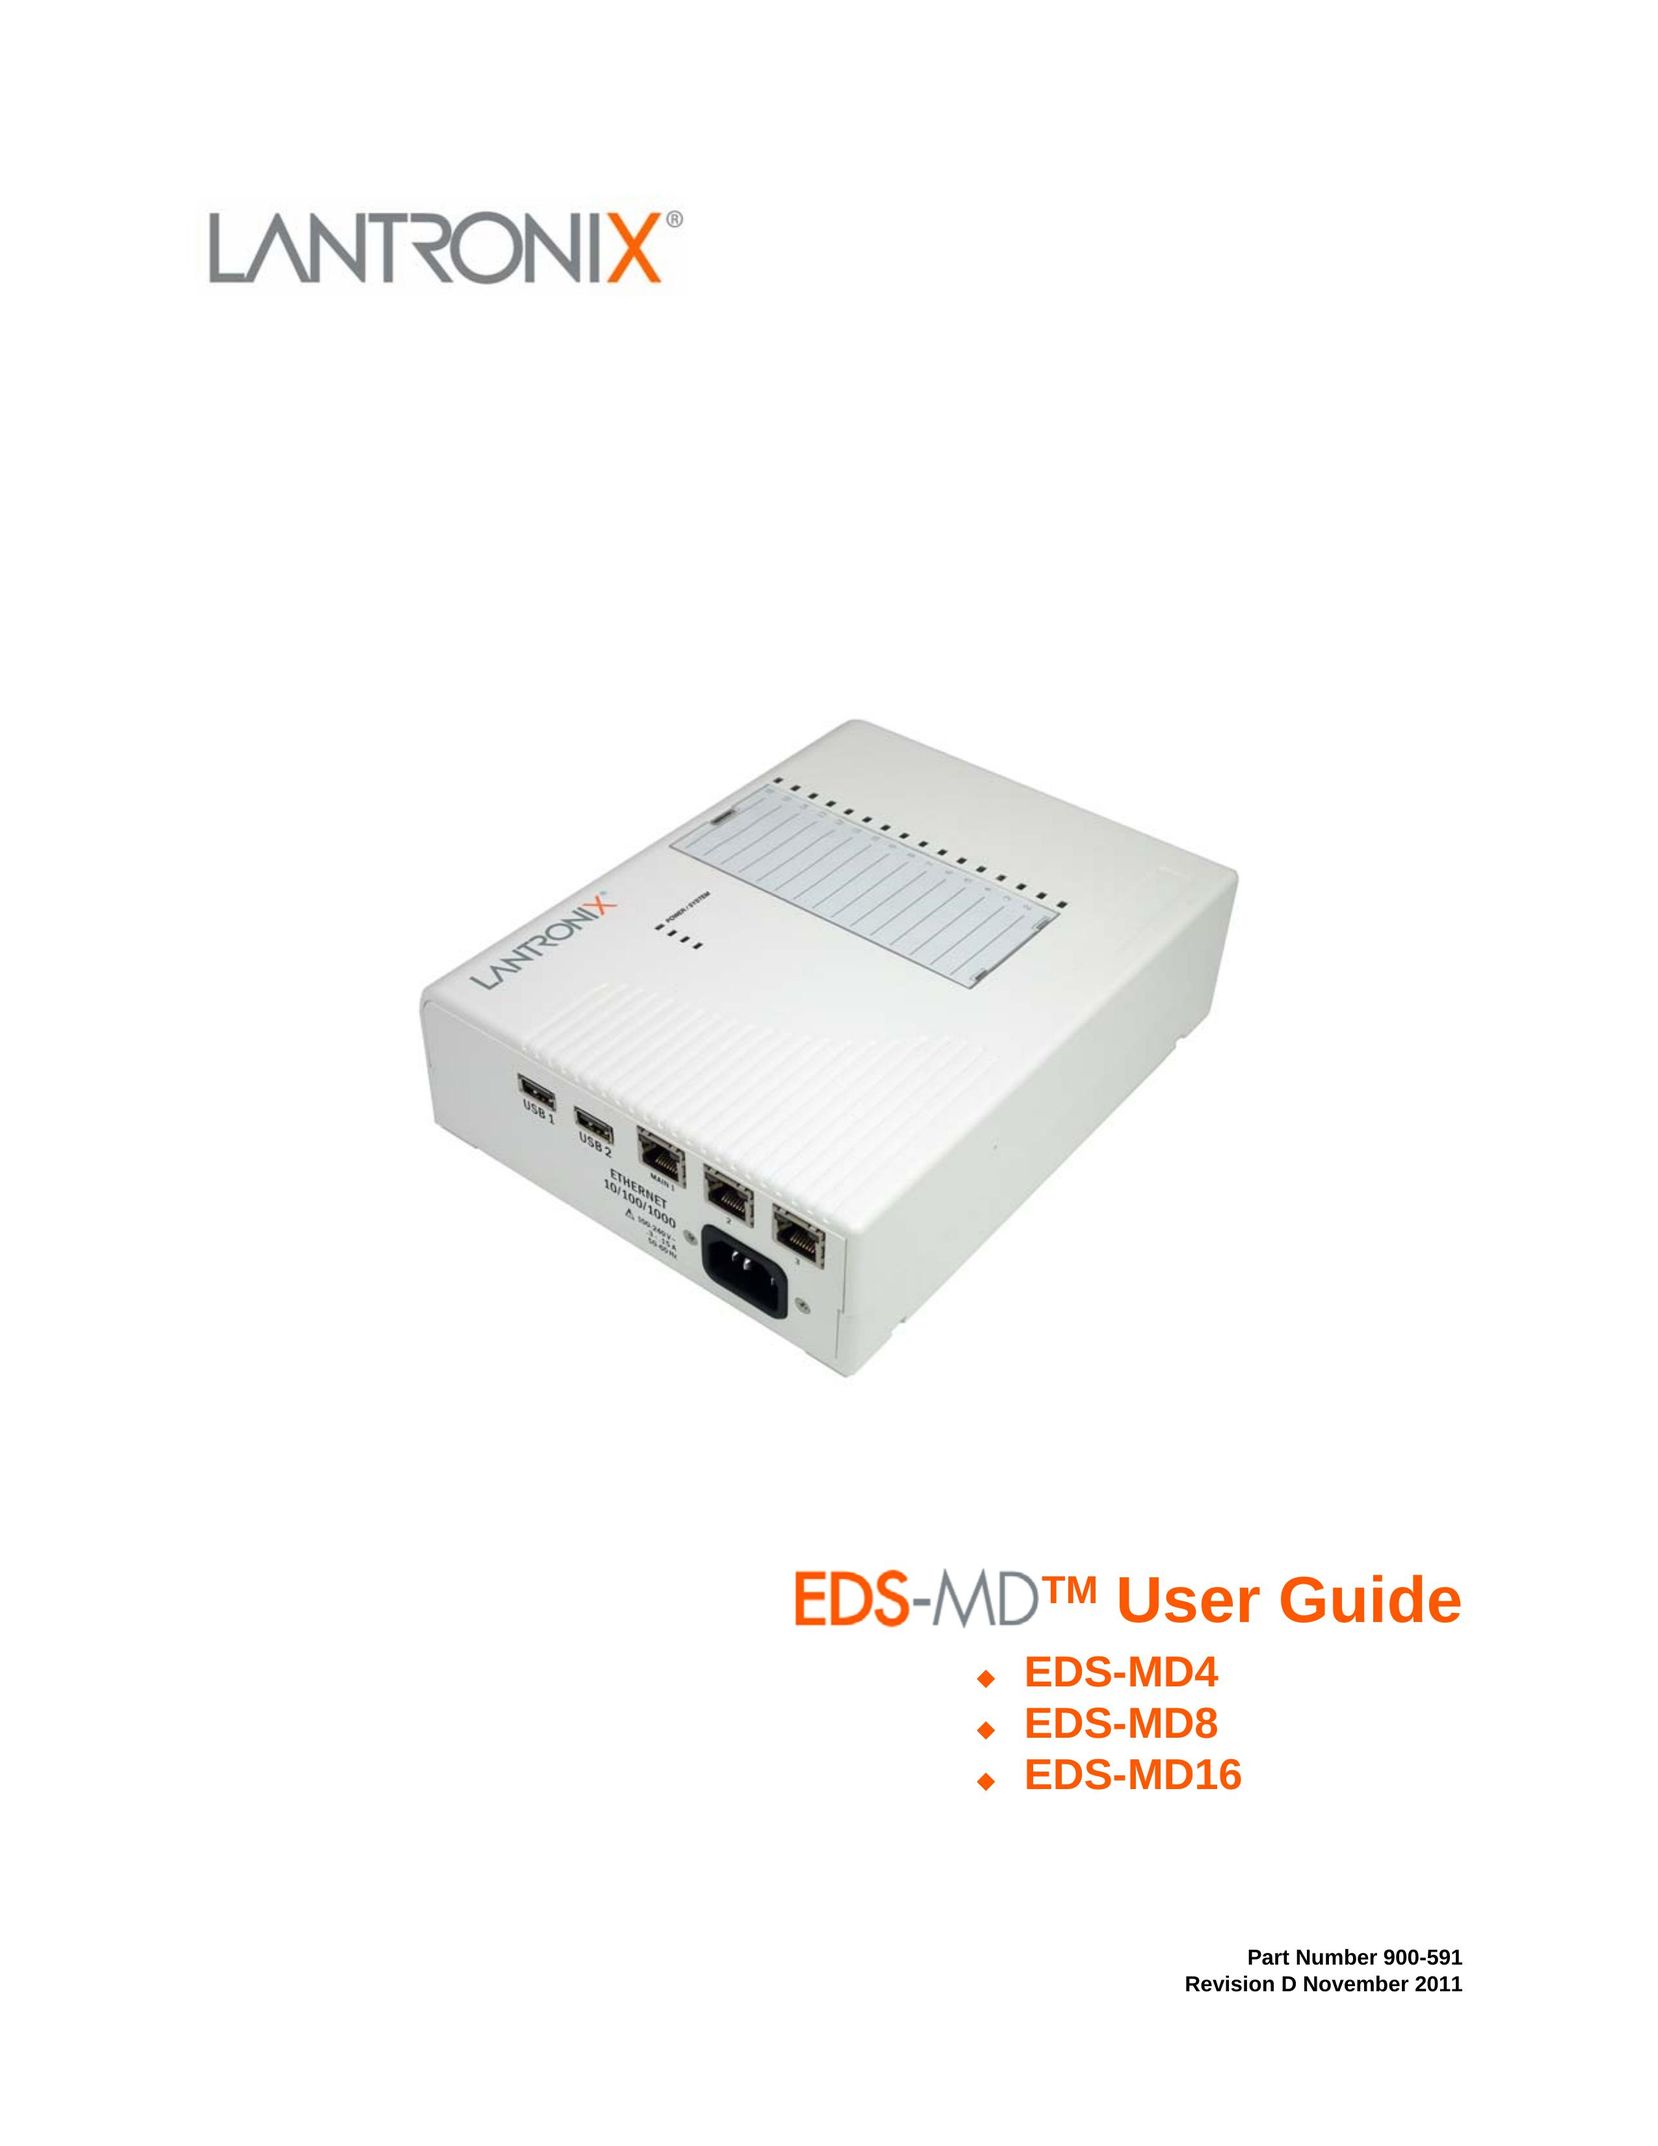 Lantronix EDS-MD4 Server User Manual